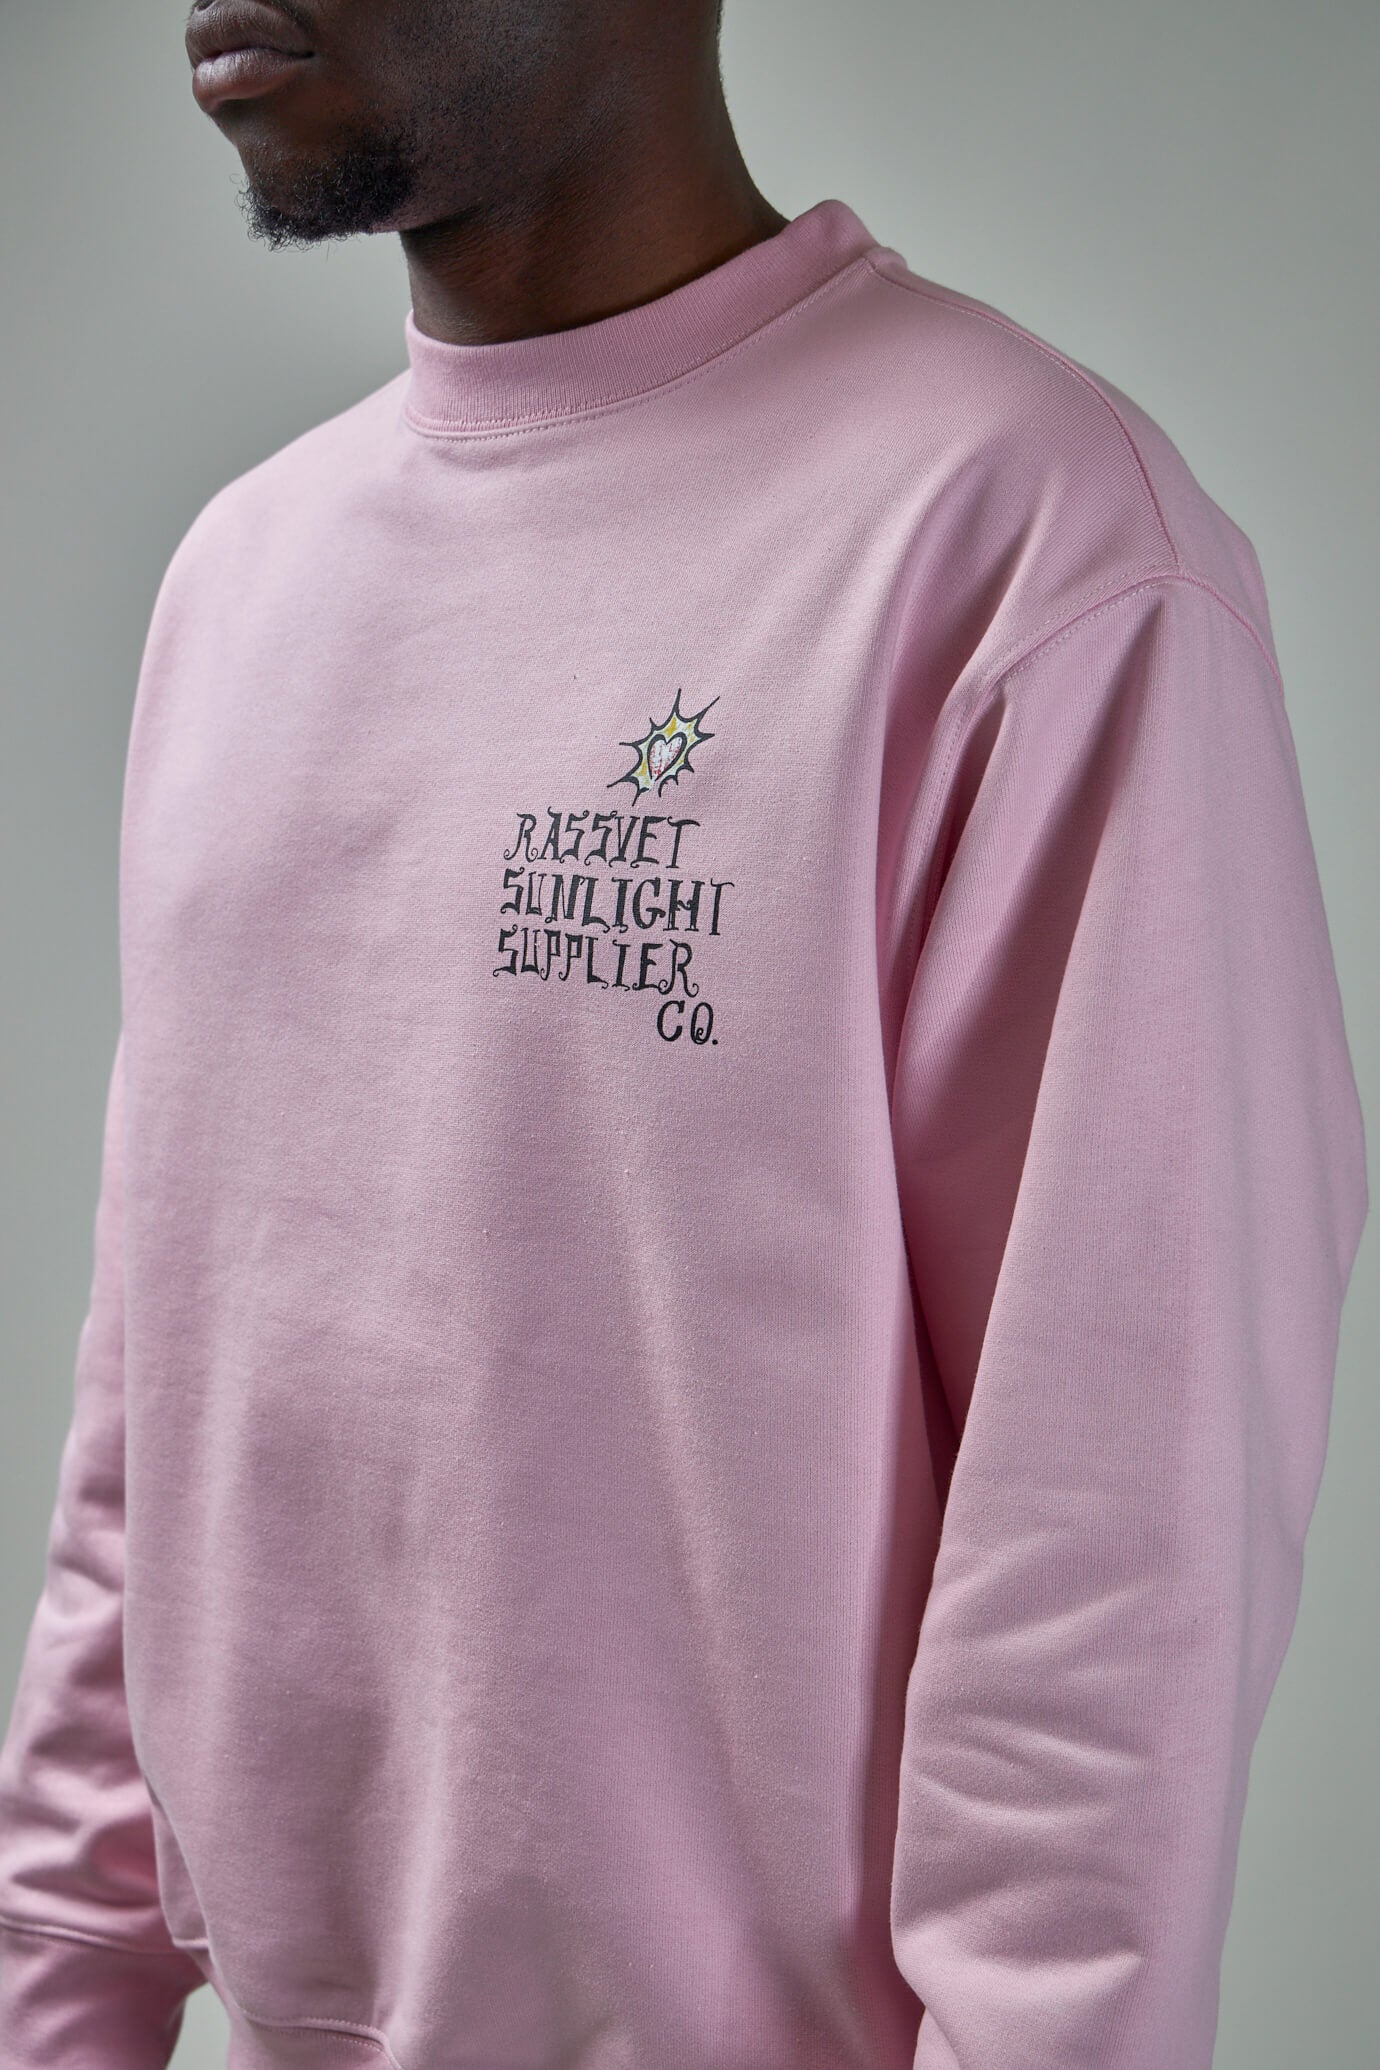 Men Sunlight Supplier Sweatshirt Knit, pink